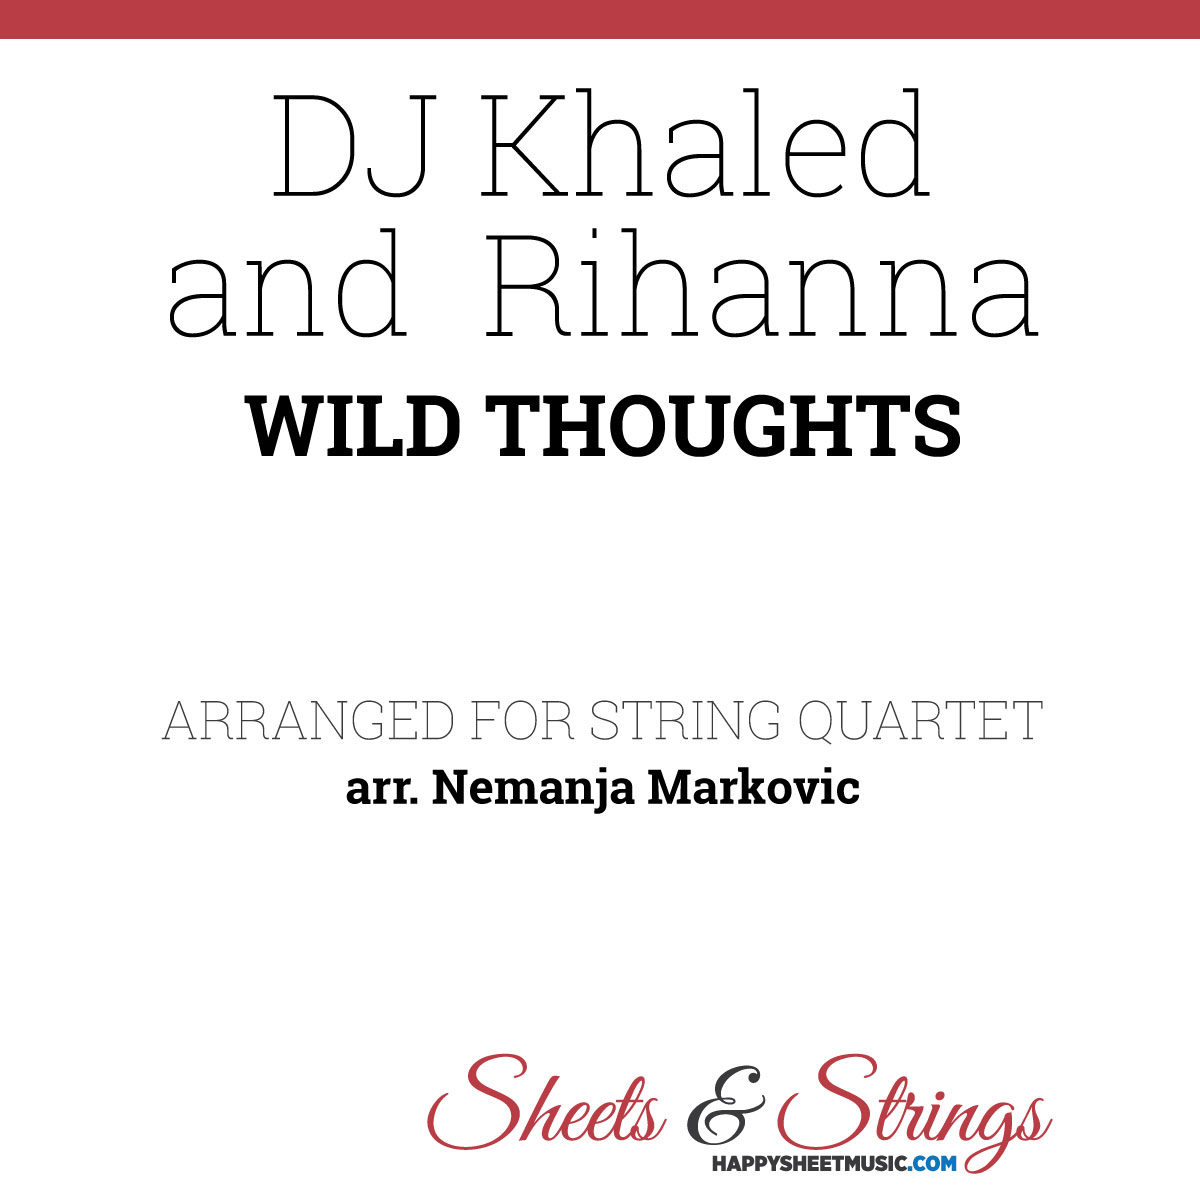 DJ Khaled and Rihanna - Wild Thoughts - Sheet Music for String Quartet - Music Arrangement for String Quartet